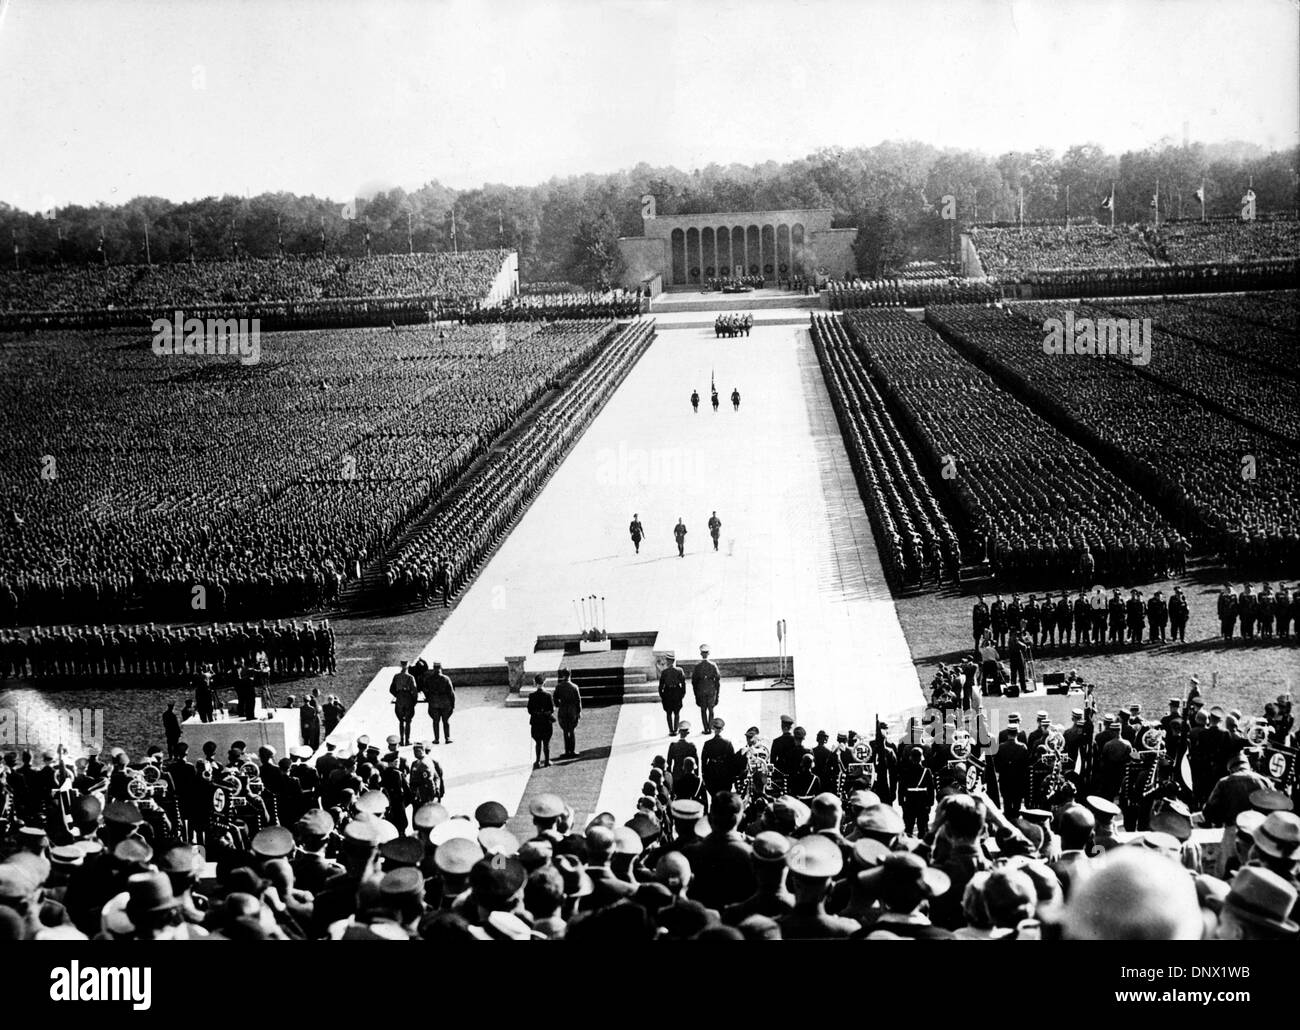 Sept. 14, 1936 - Nuremberg, Germany - More than 100,000 Nazi supporters gather in Nuremberg, Germany, for a Nazi rally in 1936. (Credit Image: © KEYSTONE Pictures USA/ZUMAPRESS.com) Stock Photo